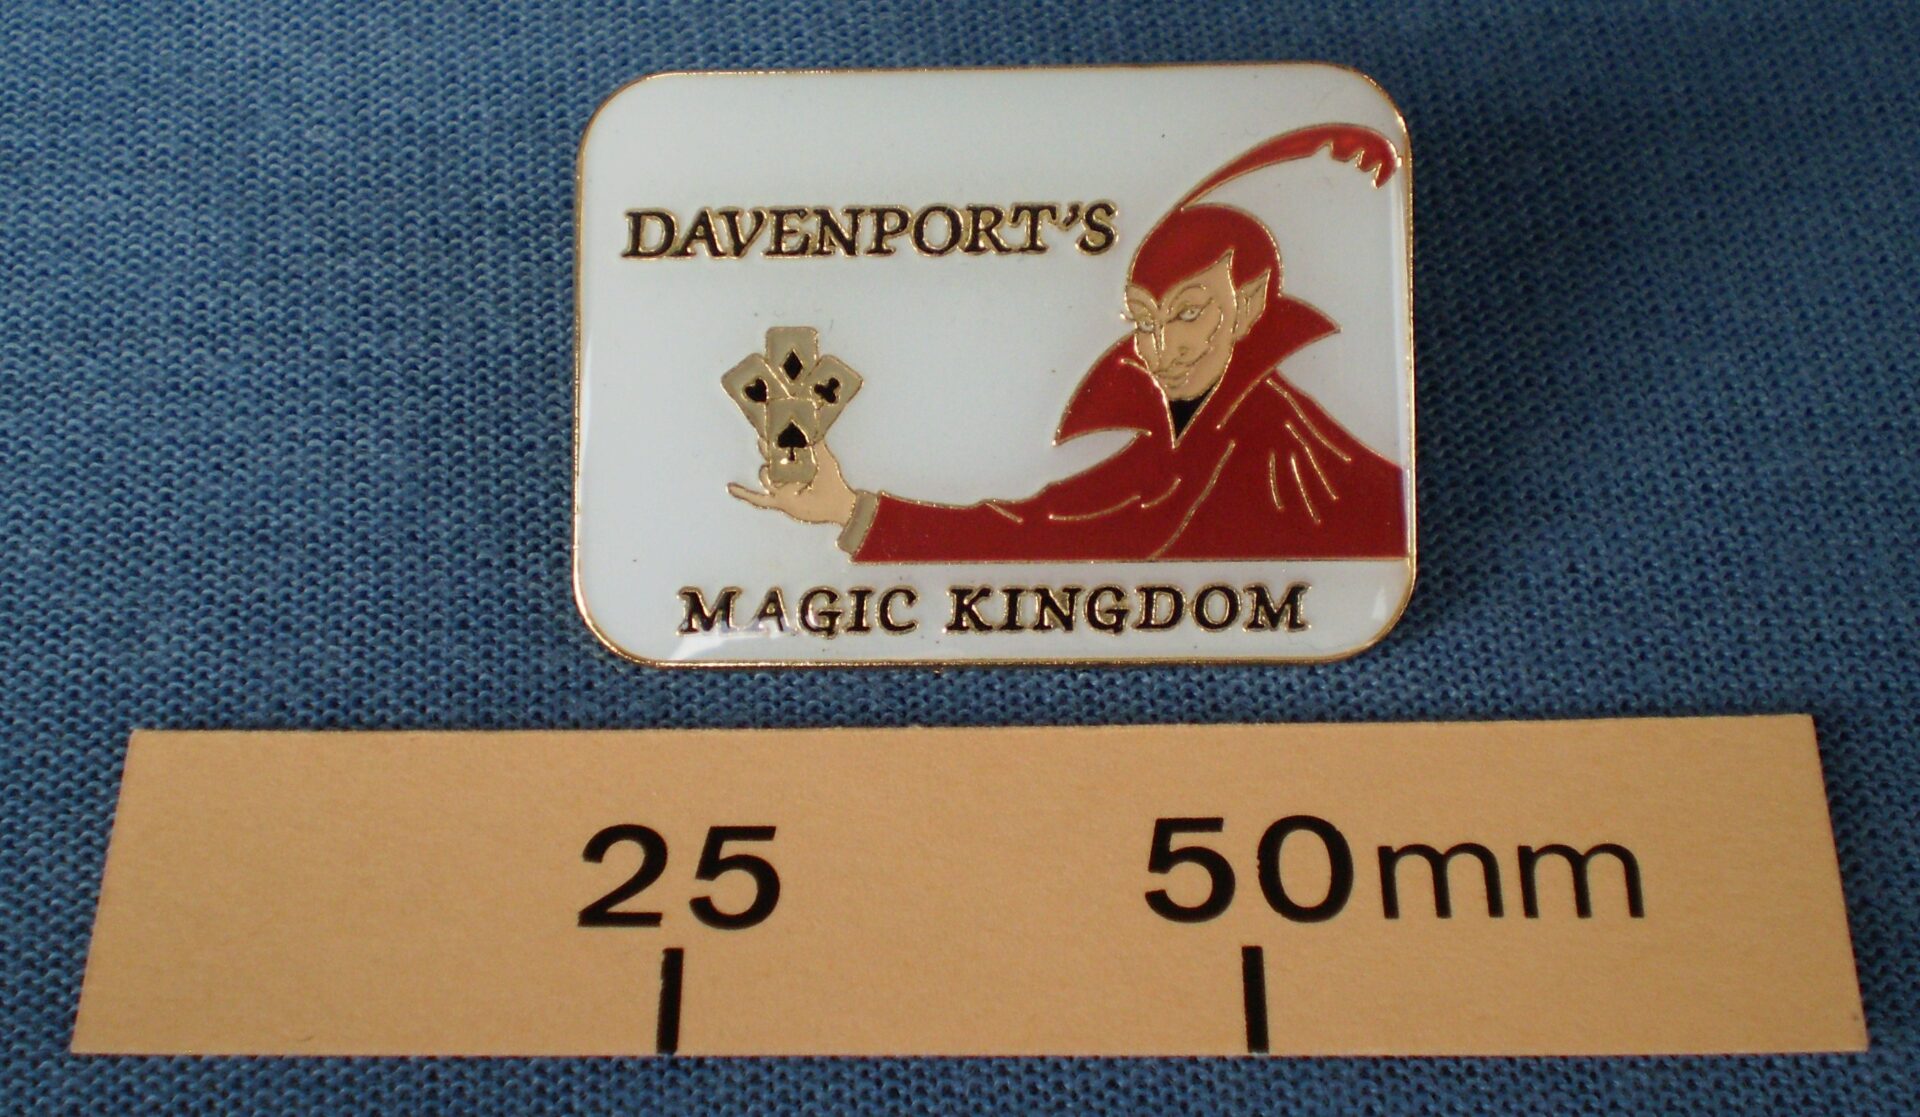 Davenport’s Magic Kingdom badge